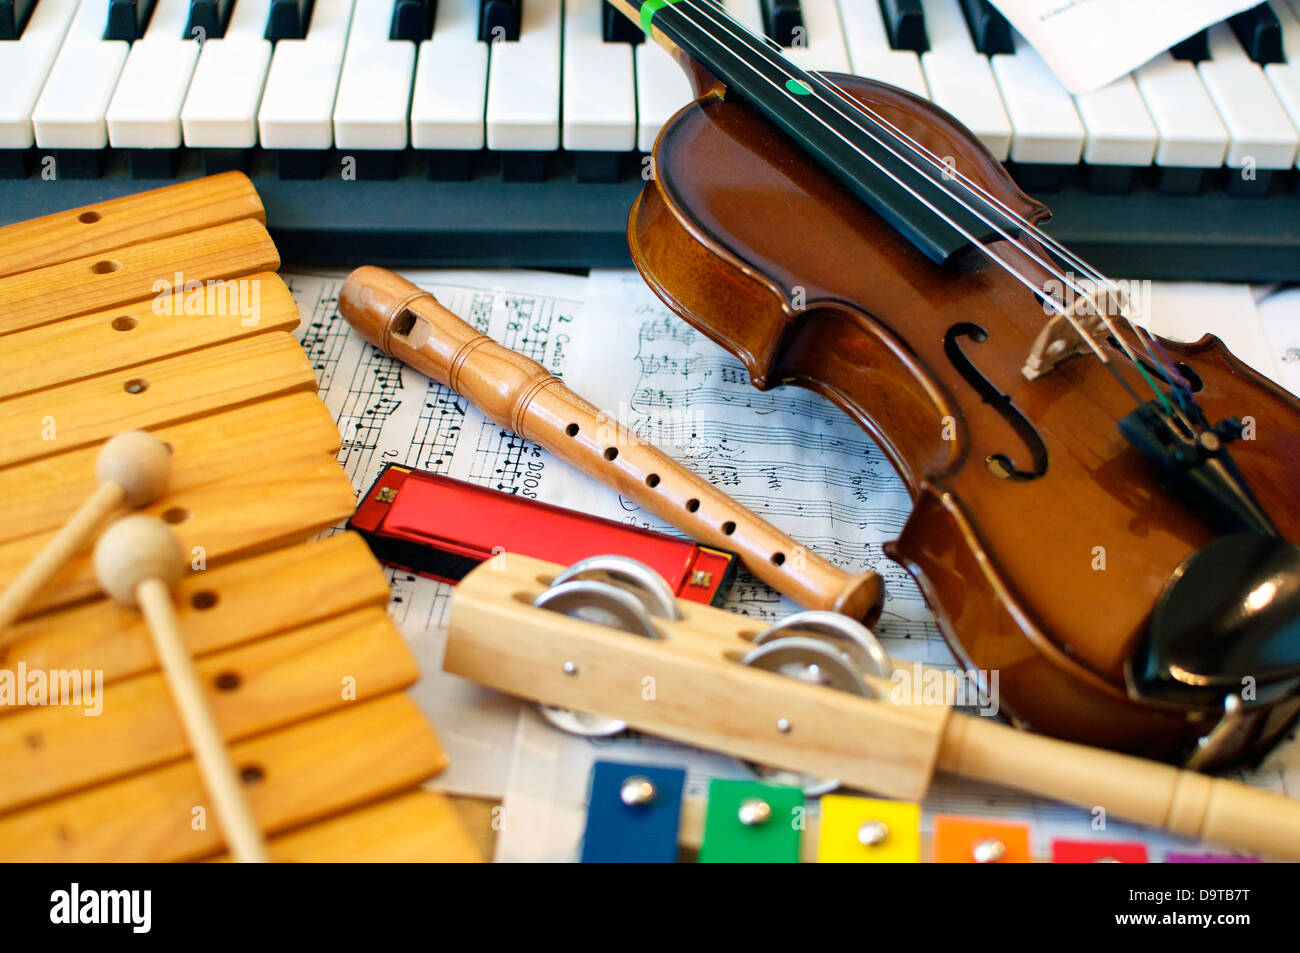 Musical instruments for children: xylophone, children's violin, tambourine, flute, harmonica, piano keyboard. Stock Photo